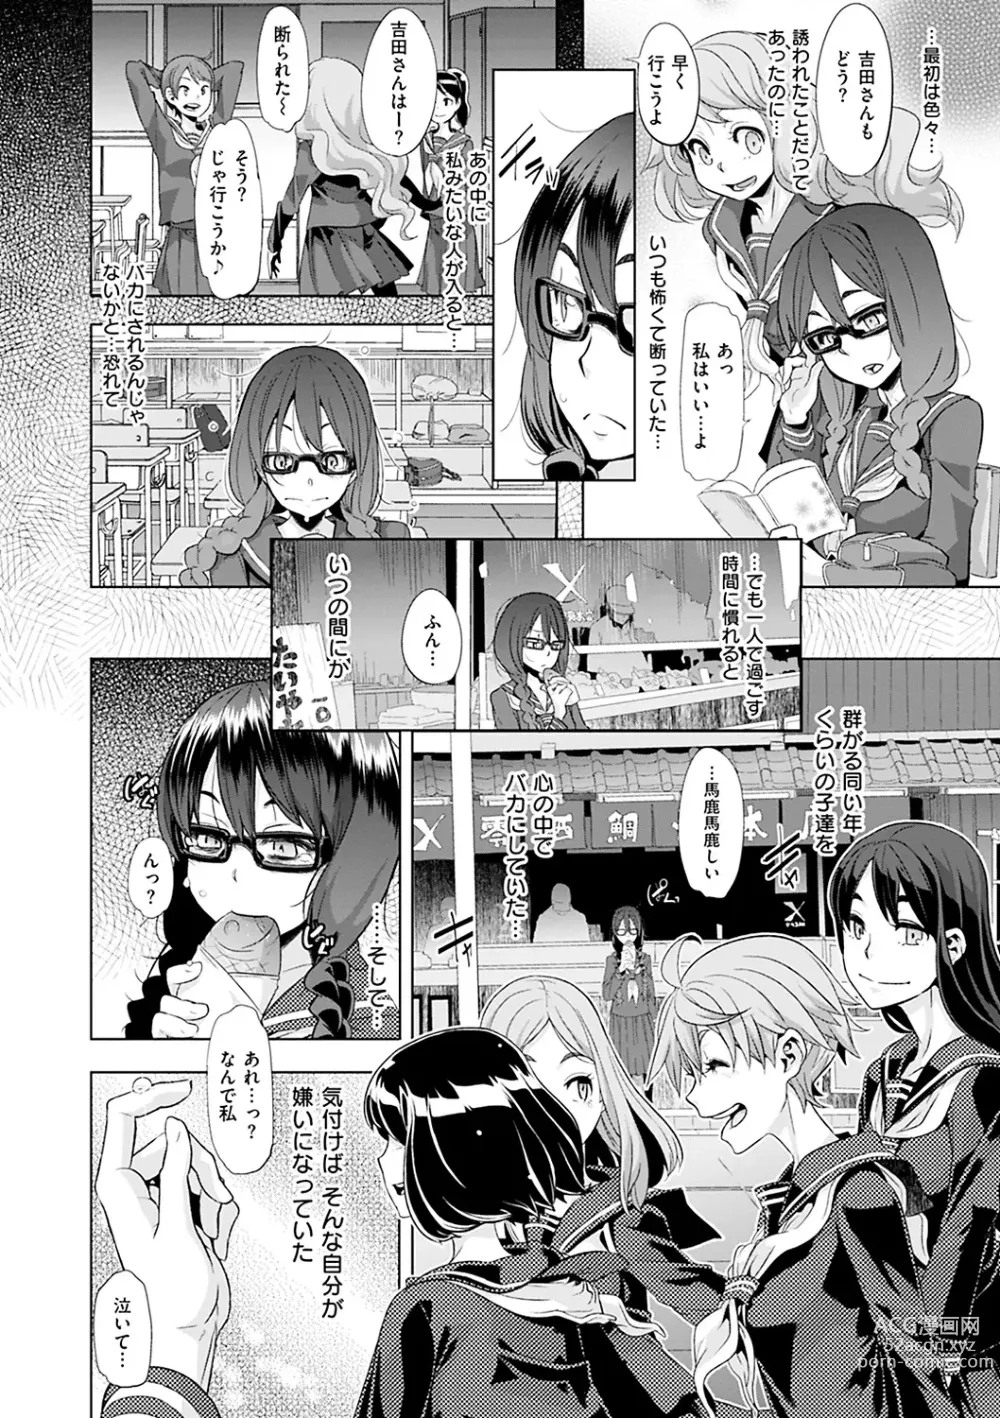 Page 7 of manga Emergence